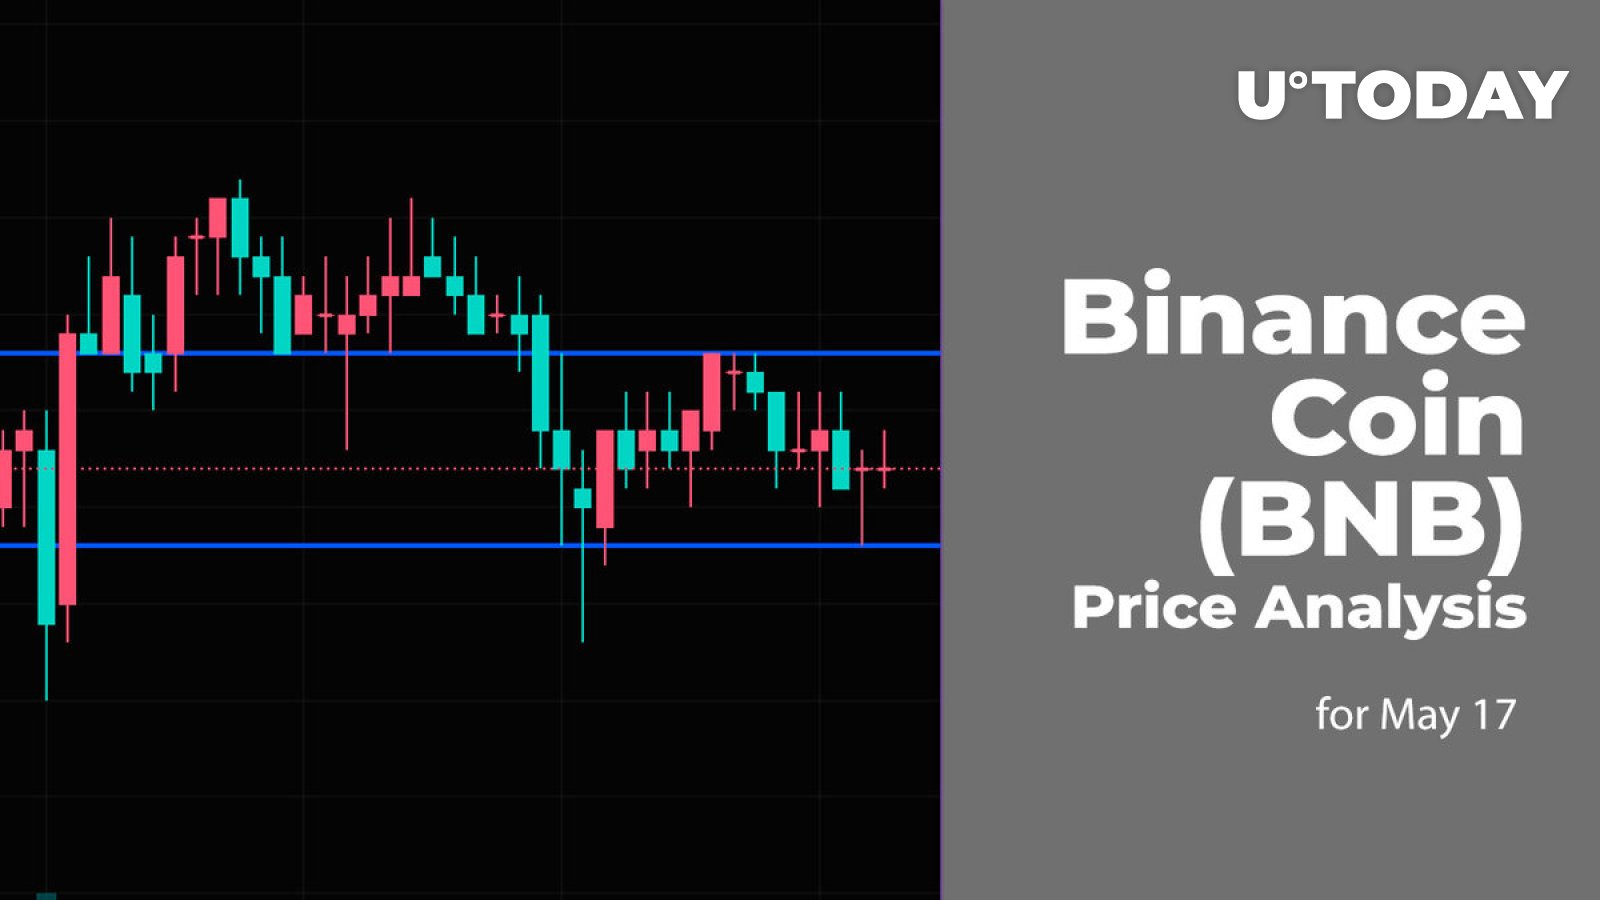 Binance Coin (BNB) Price Analysis for May 17